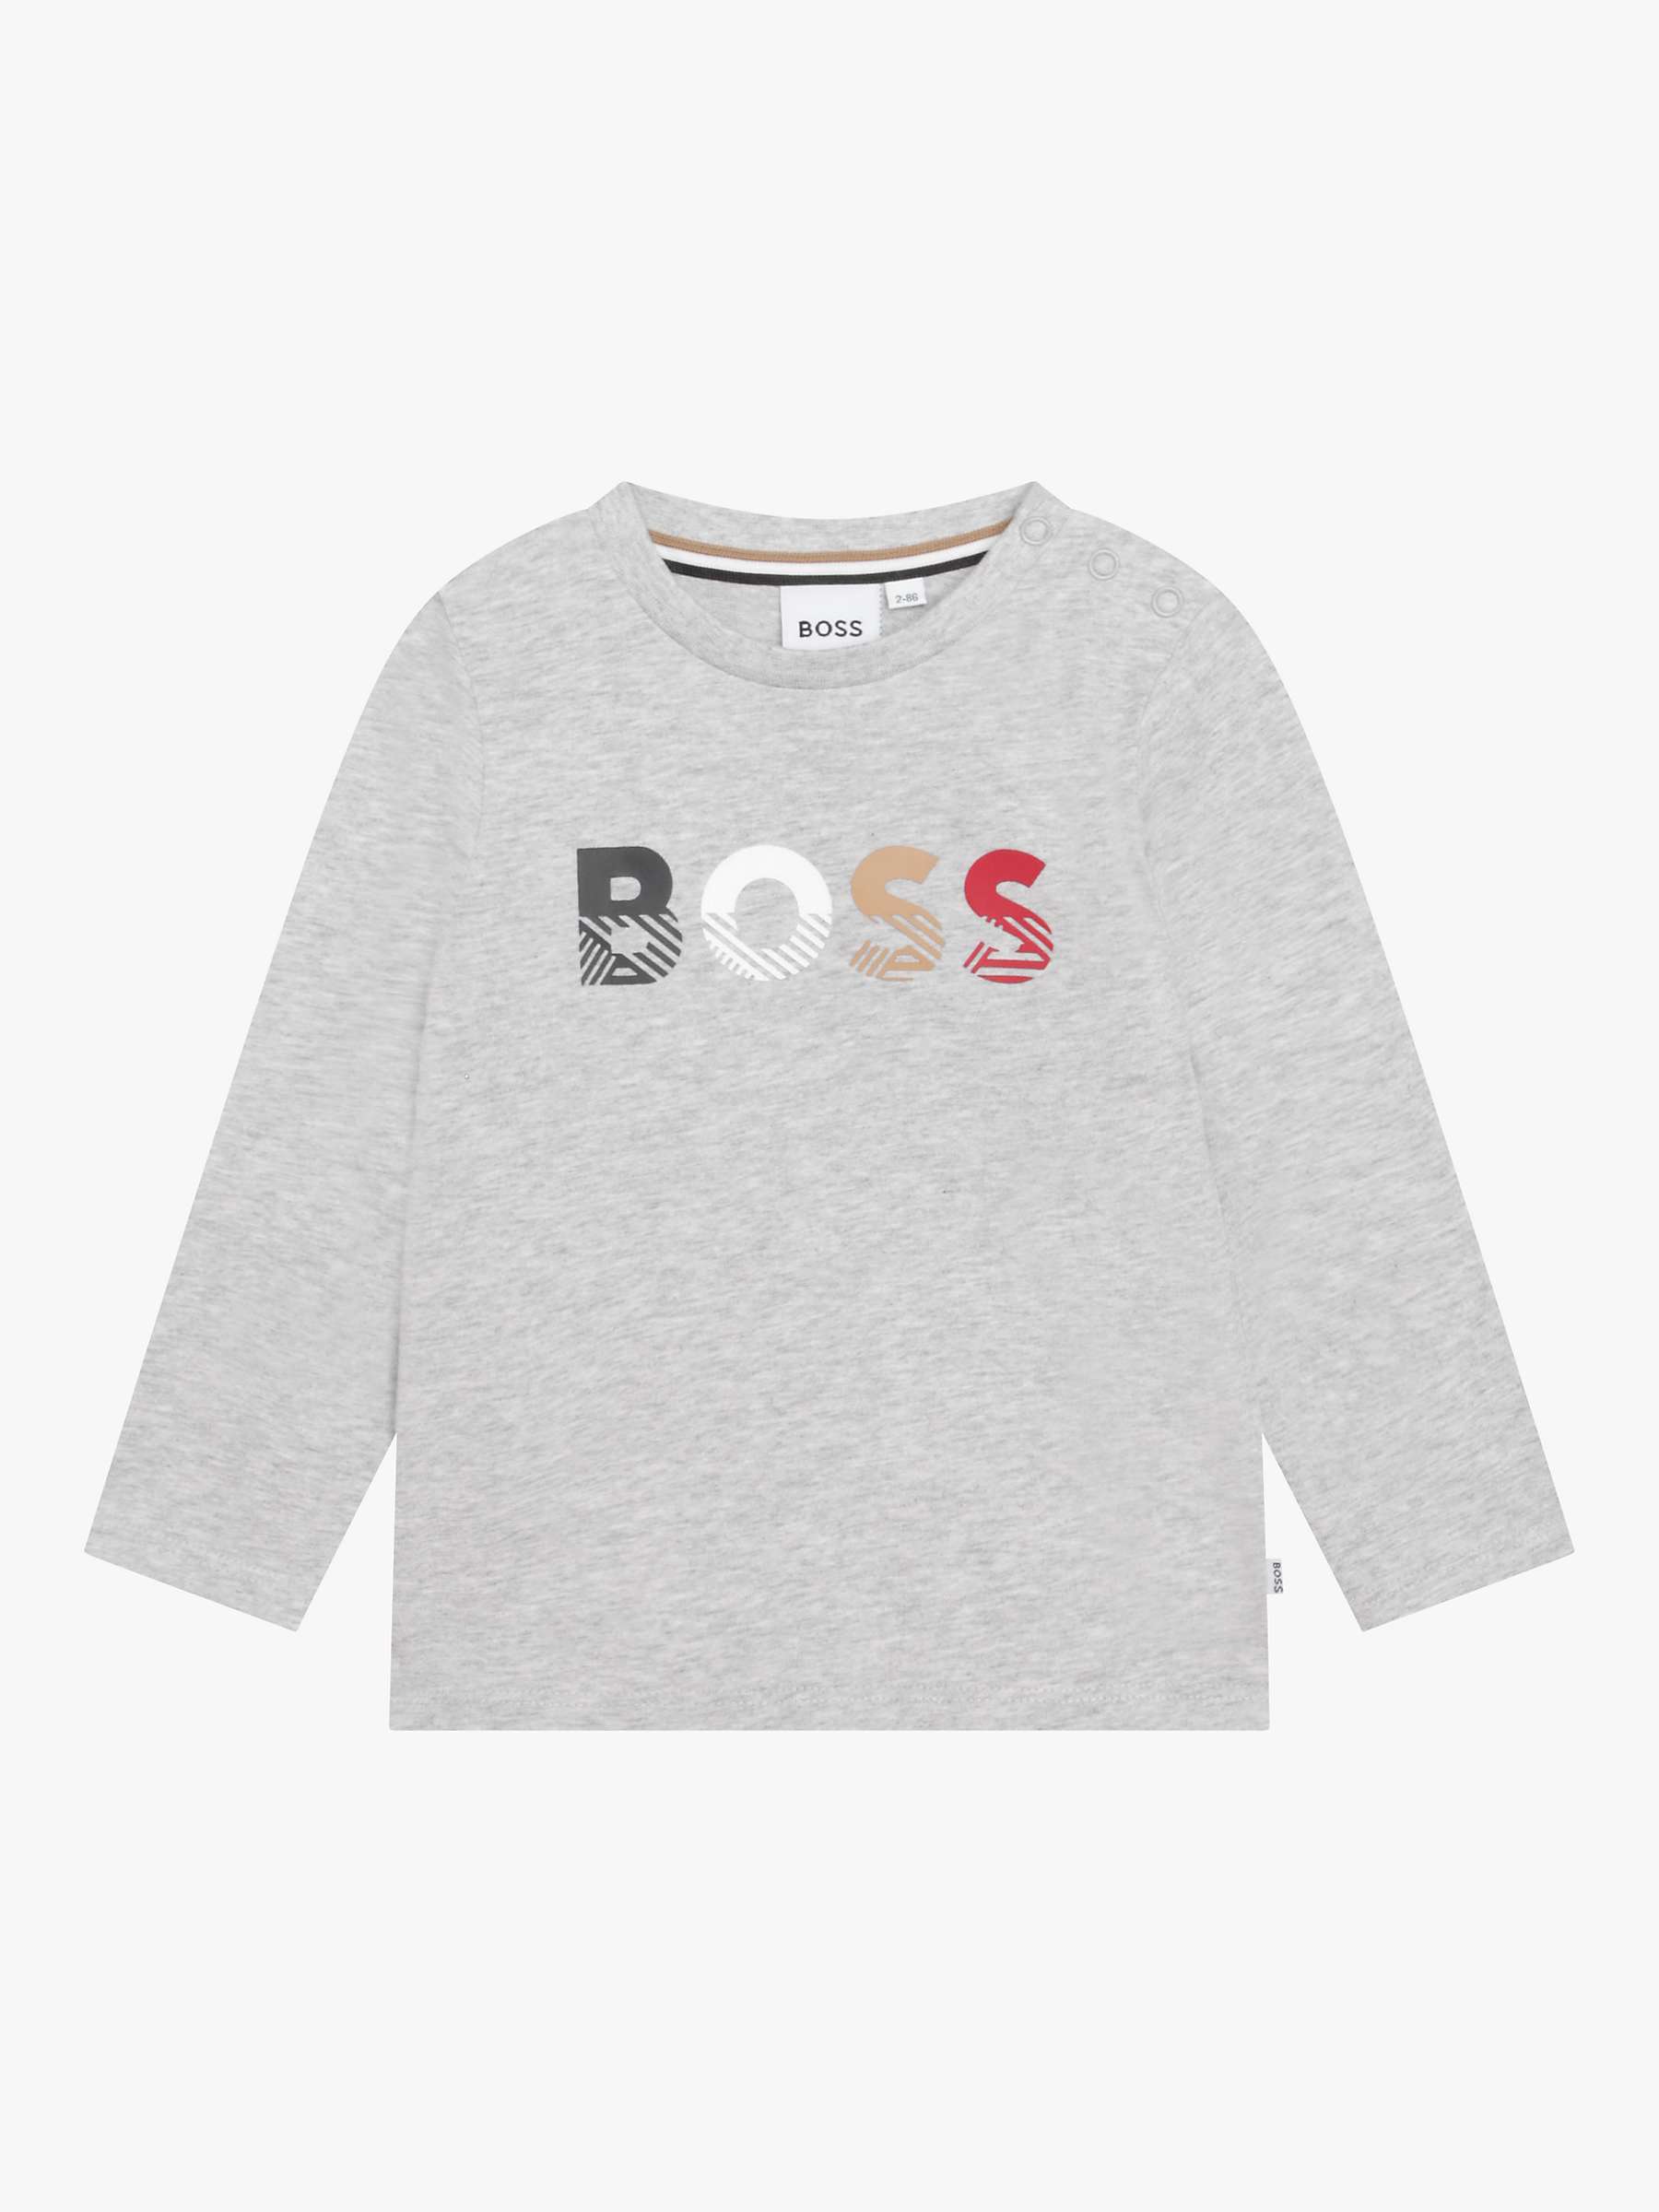 Buy HUGO BOSS Baby Hatched Logo Long Sleeve Jersey Top, Light Grey Online at johnlewis.com